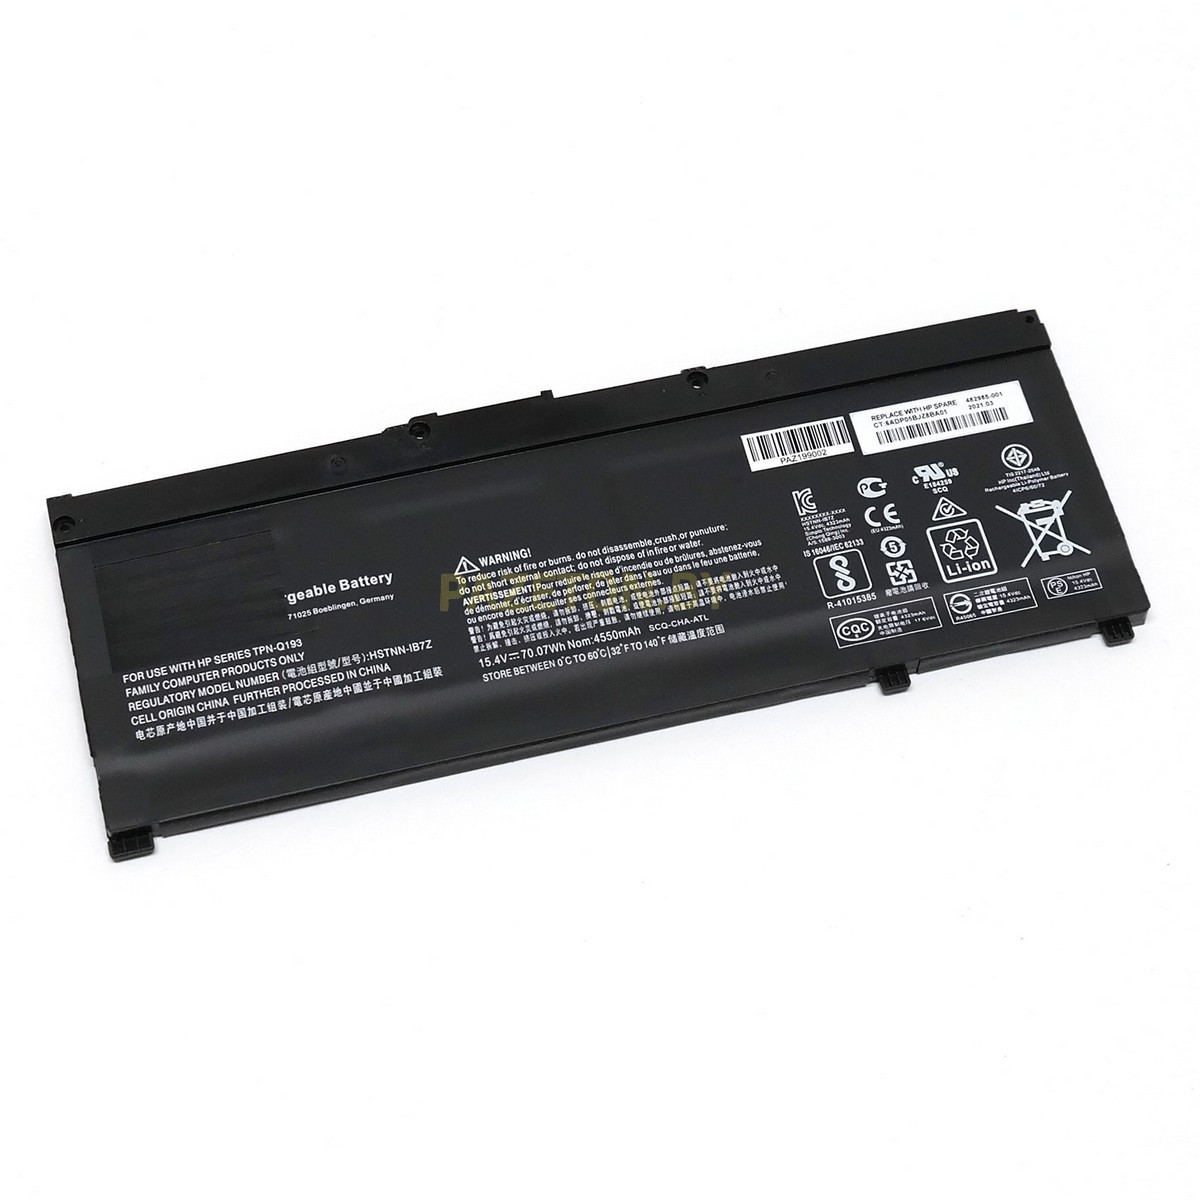 Батарея SR04 SR04XL для HP Omen 15-CE 15-CB 15-DC 15.4V 54Wh и других моделей ноутбуков